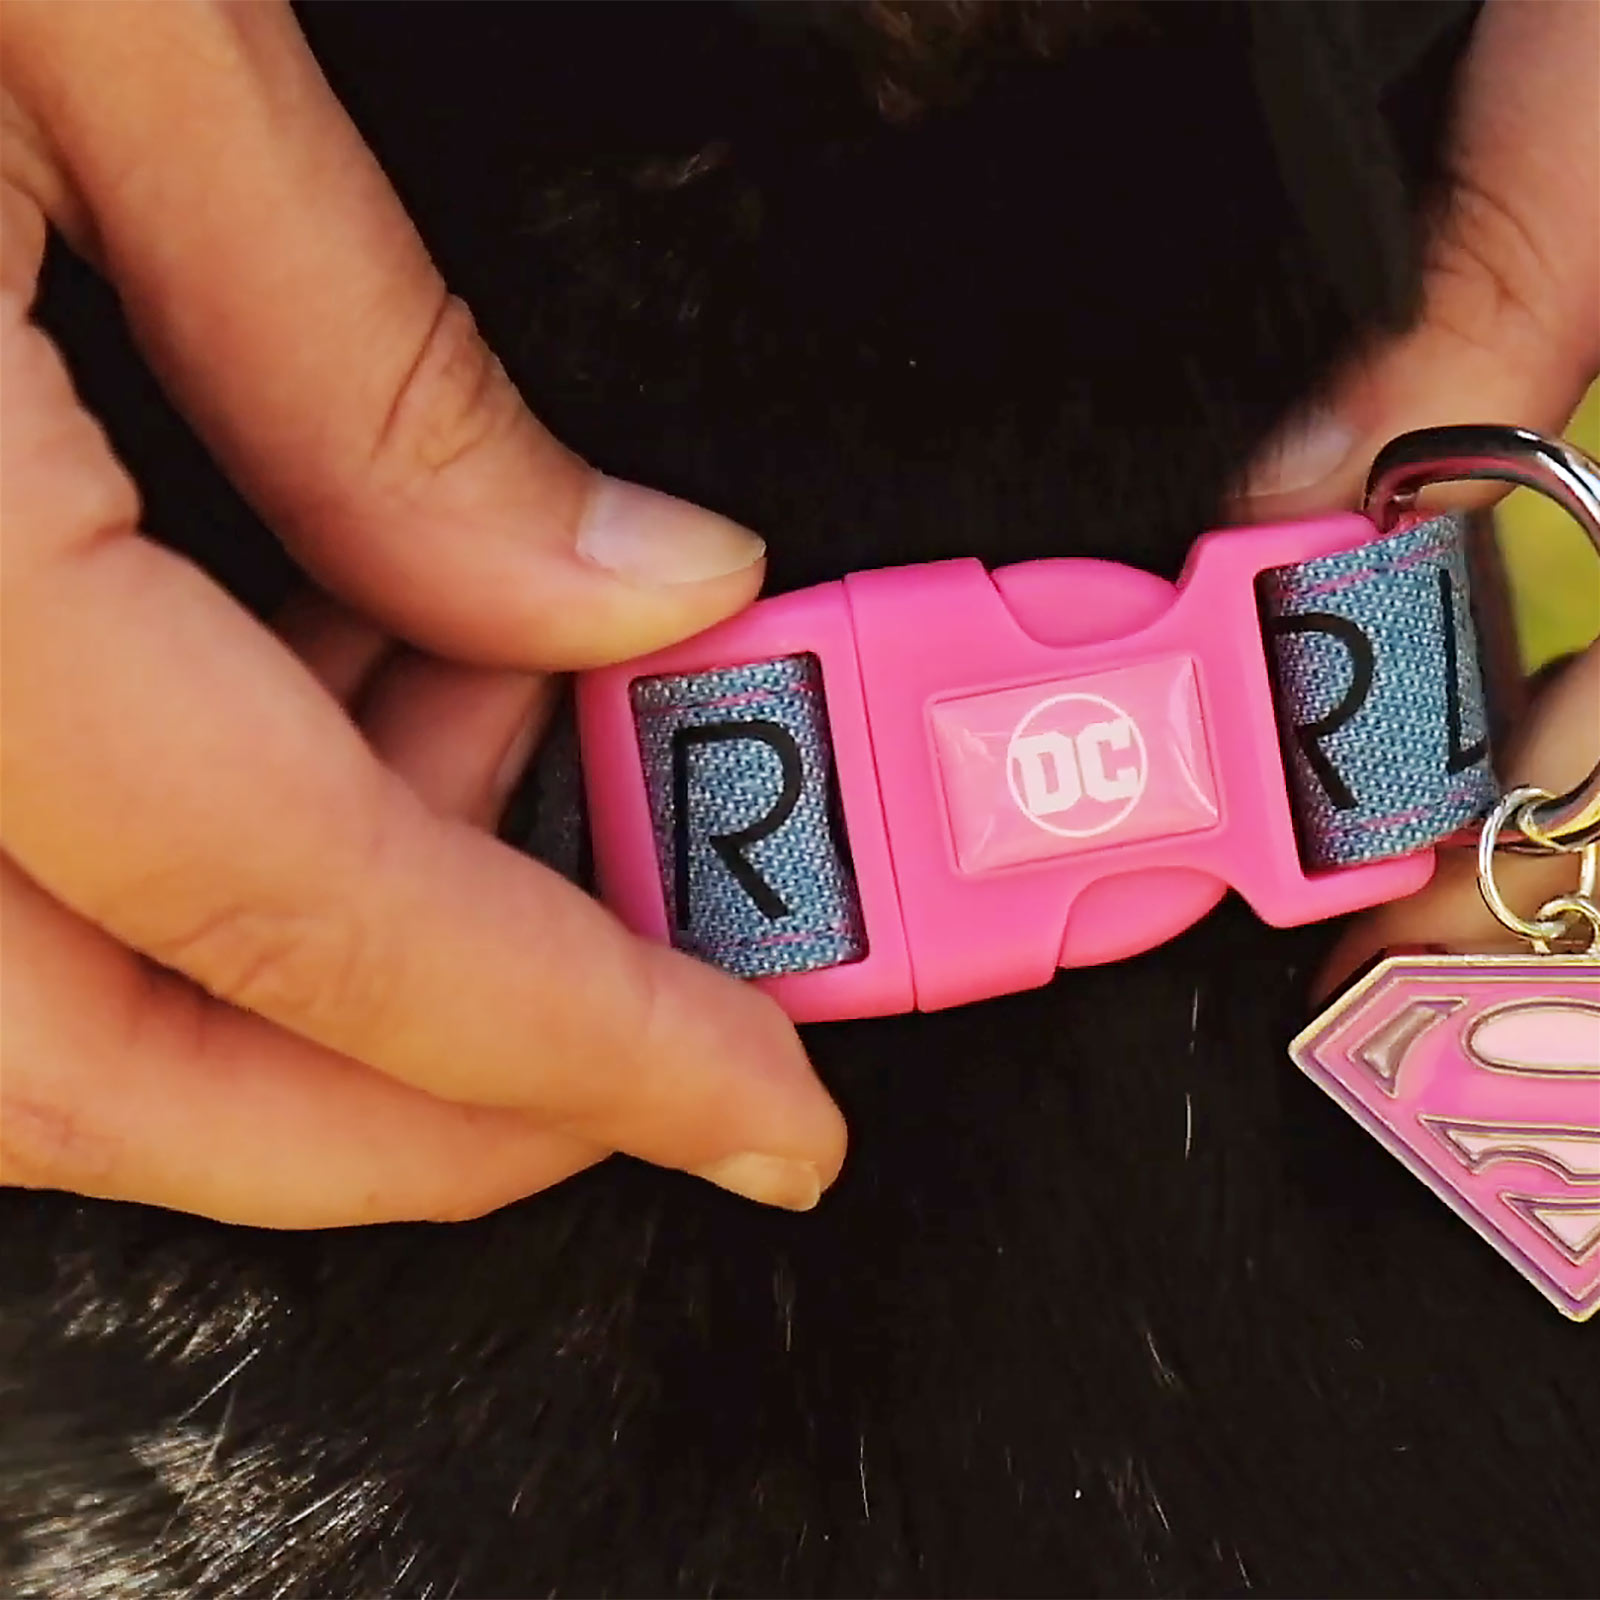 Supergirl Klick-Halsband für Hunde rosa-blau